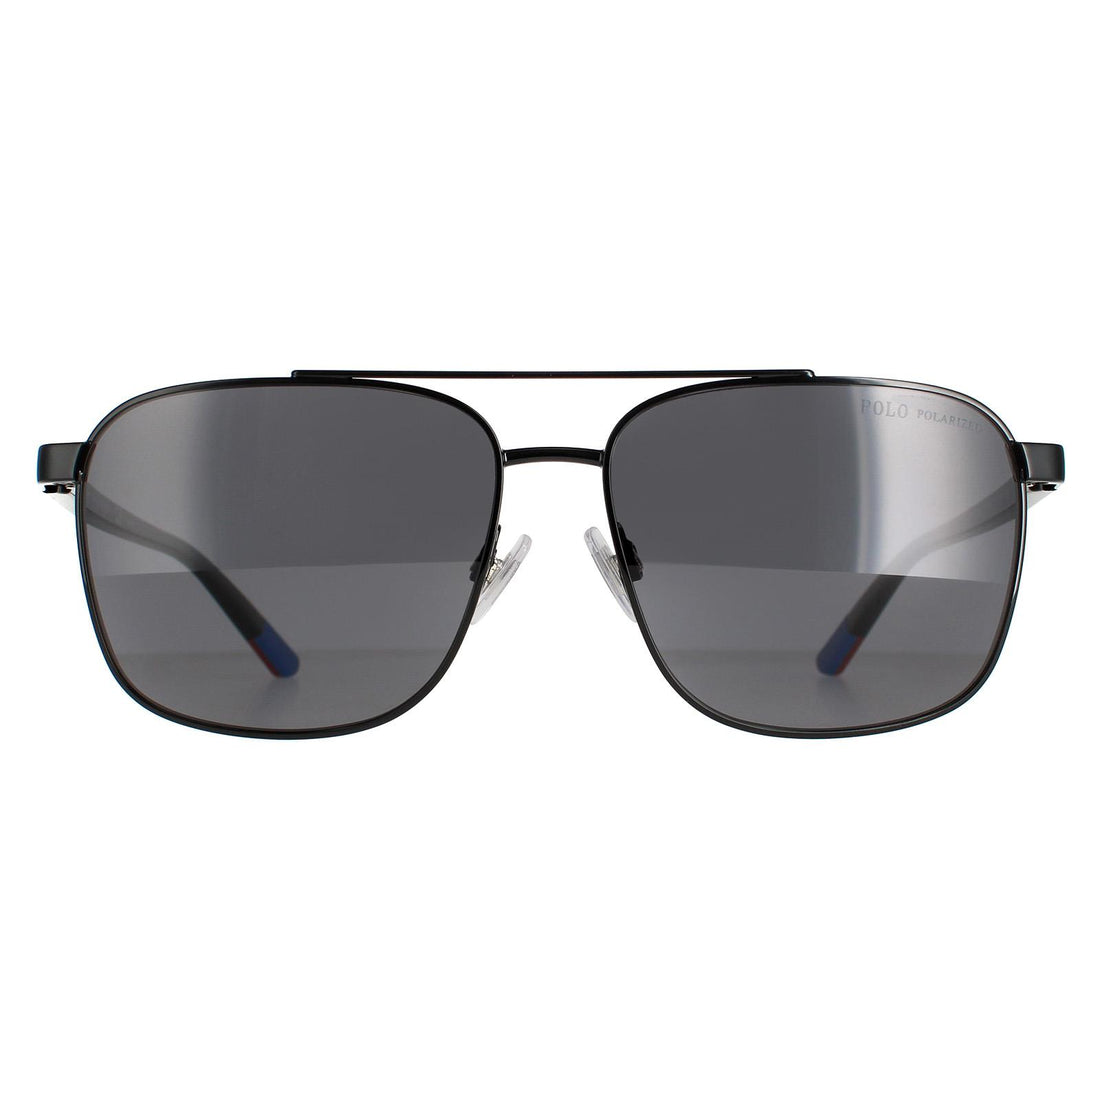 Polo Ralph Lauren PH3135 Sunglasses Shiny Black Grey Polarized